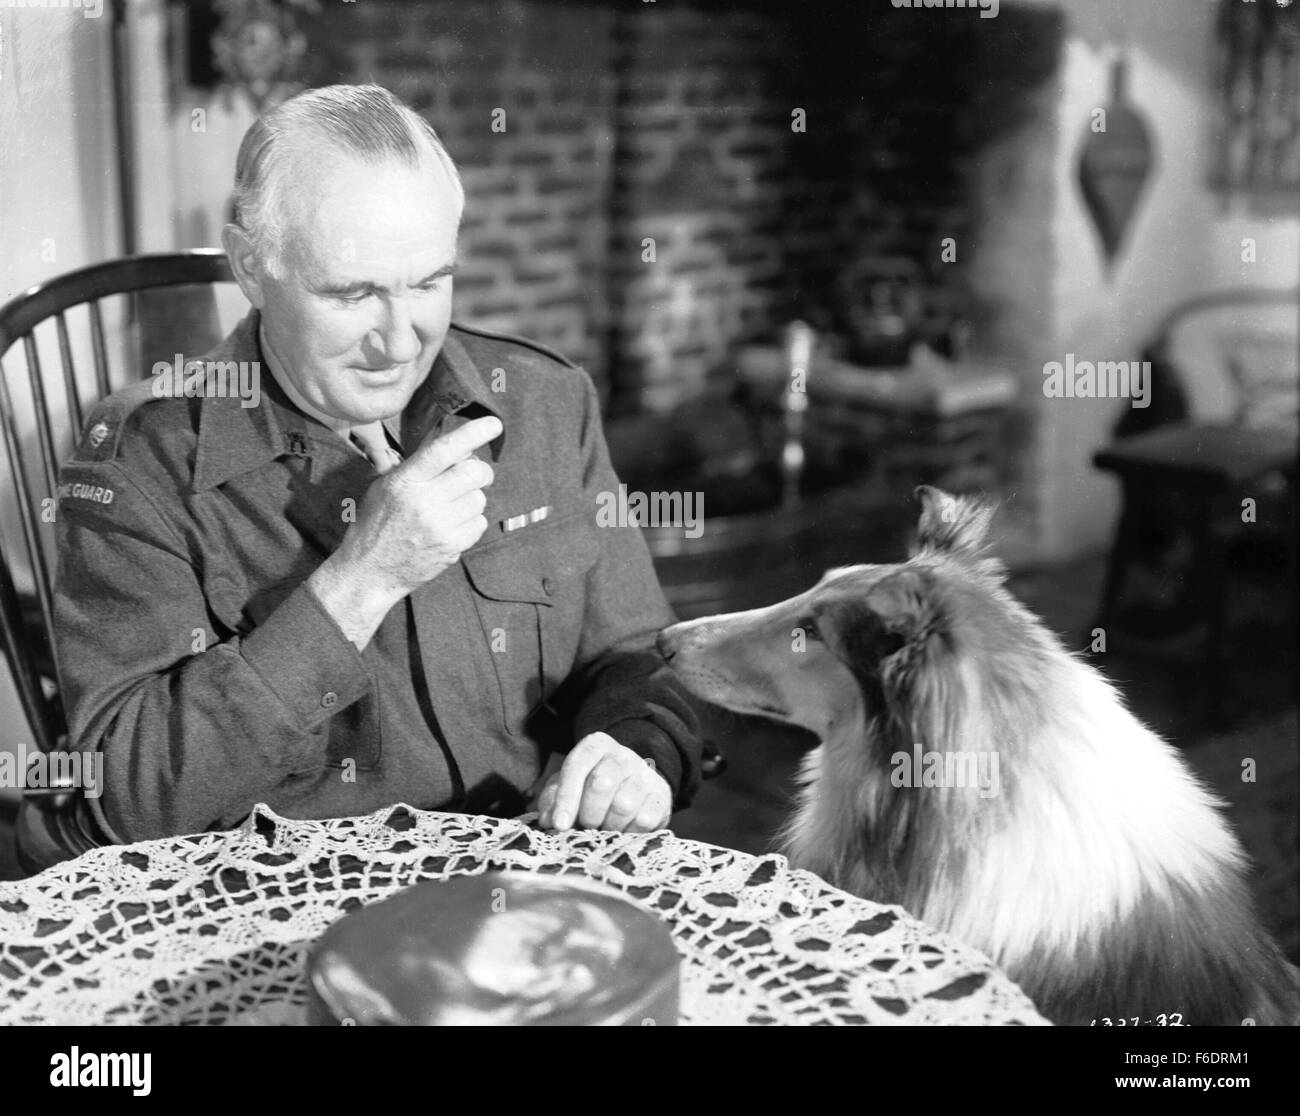 Son of Lassie (1945) - Turner Classic Movies